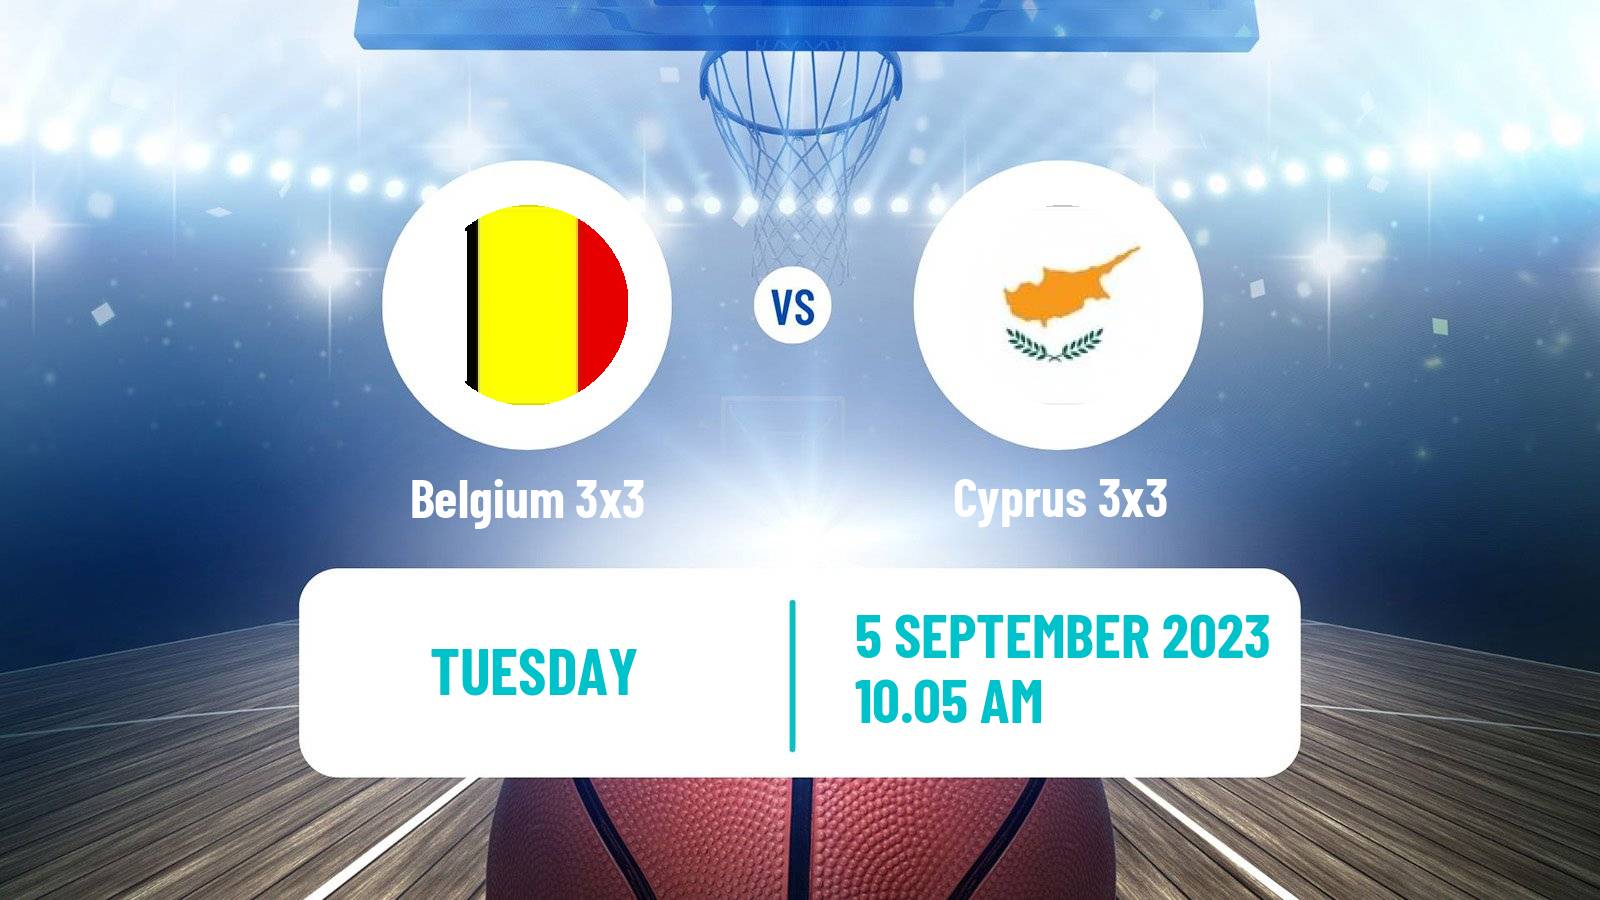 Basketball Europe Cup Basketball 3x3 Belgium 3x3 - Cyprus 3x3